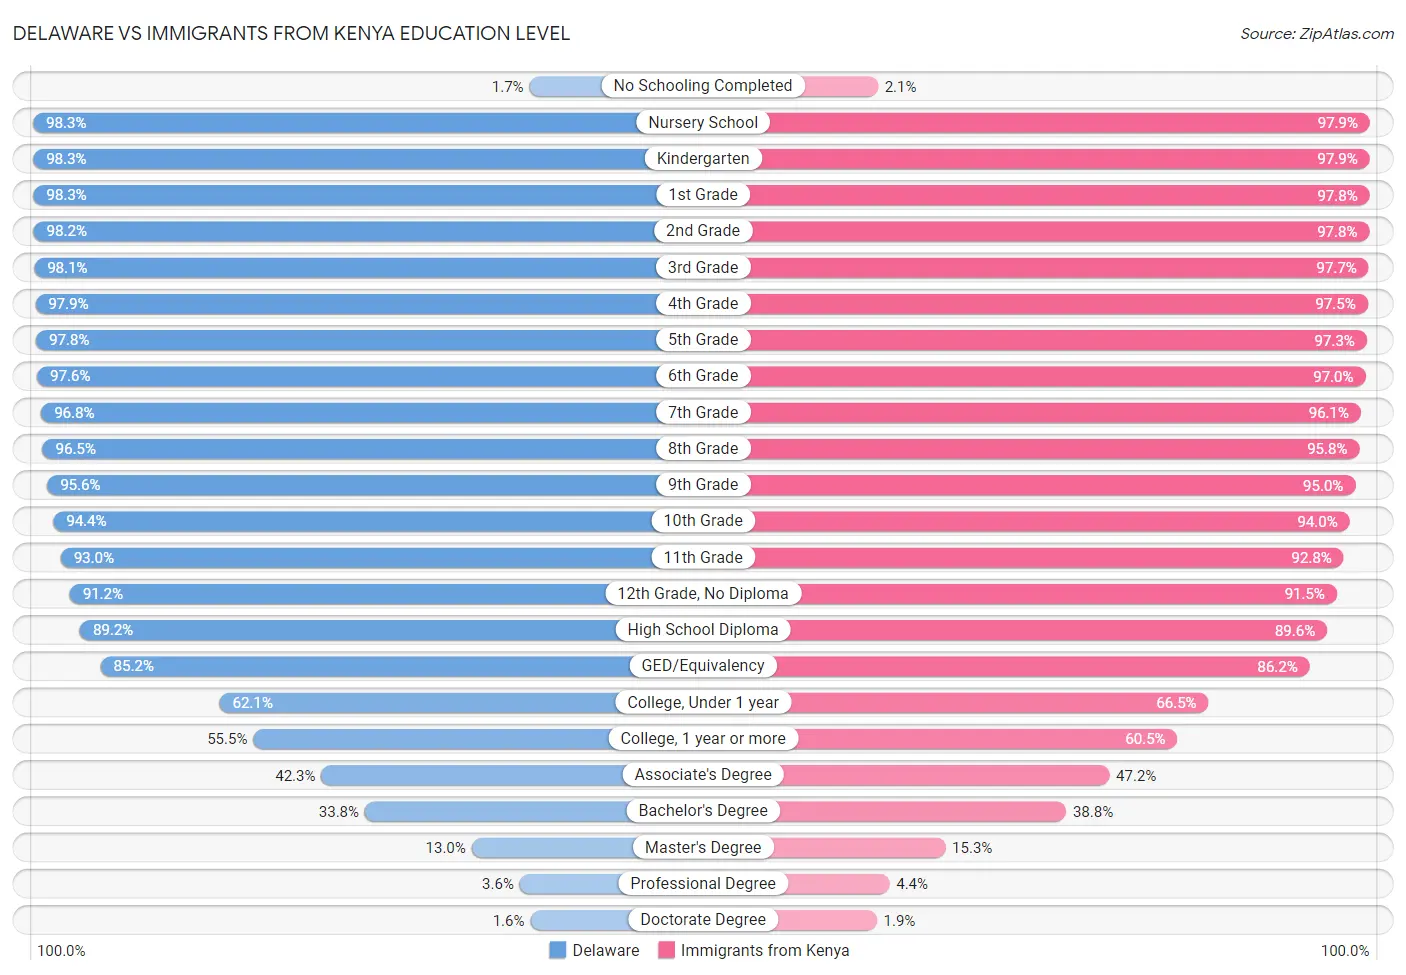 Delaware vs Immigrants from Kenya Education Level